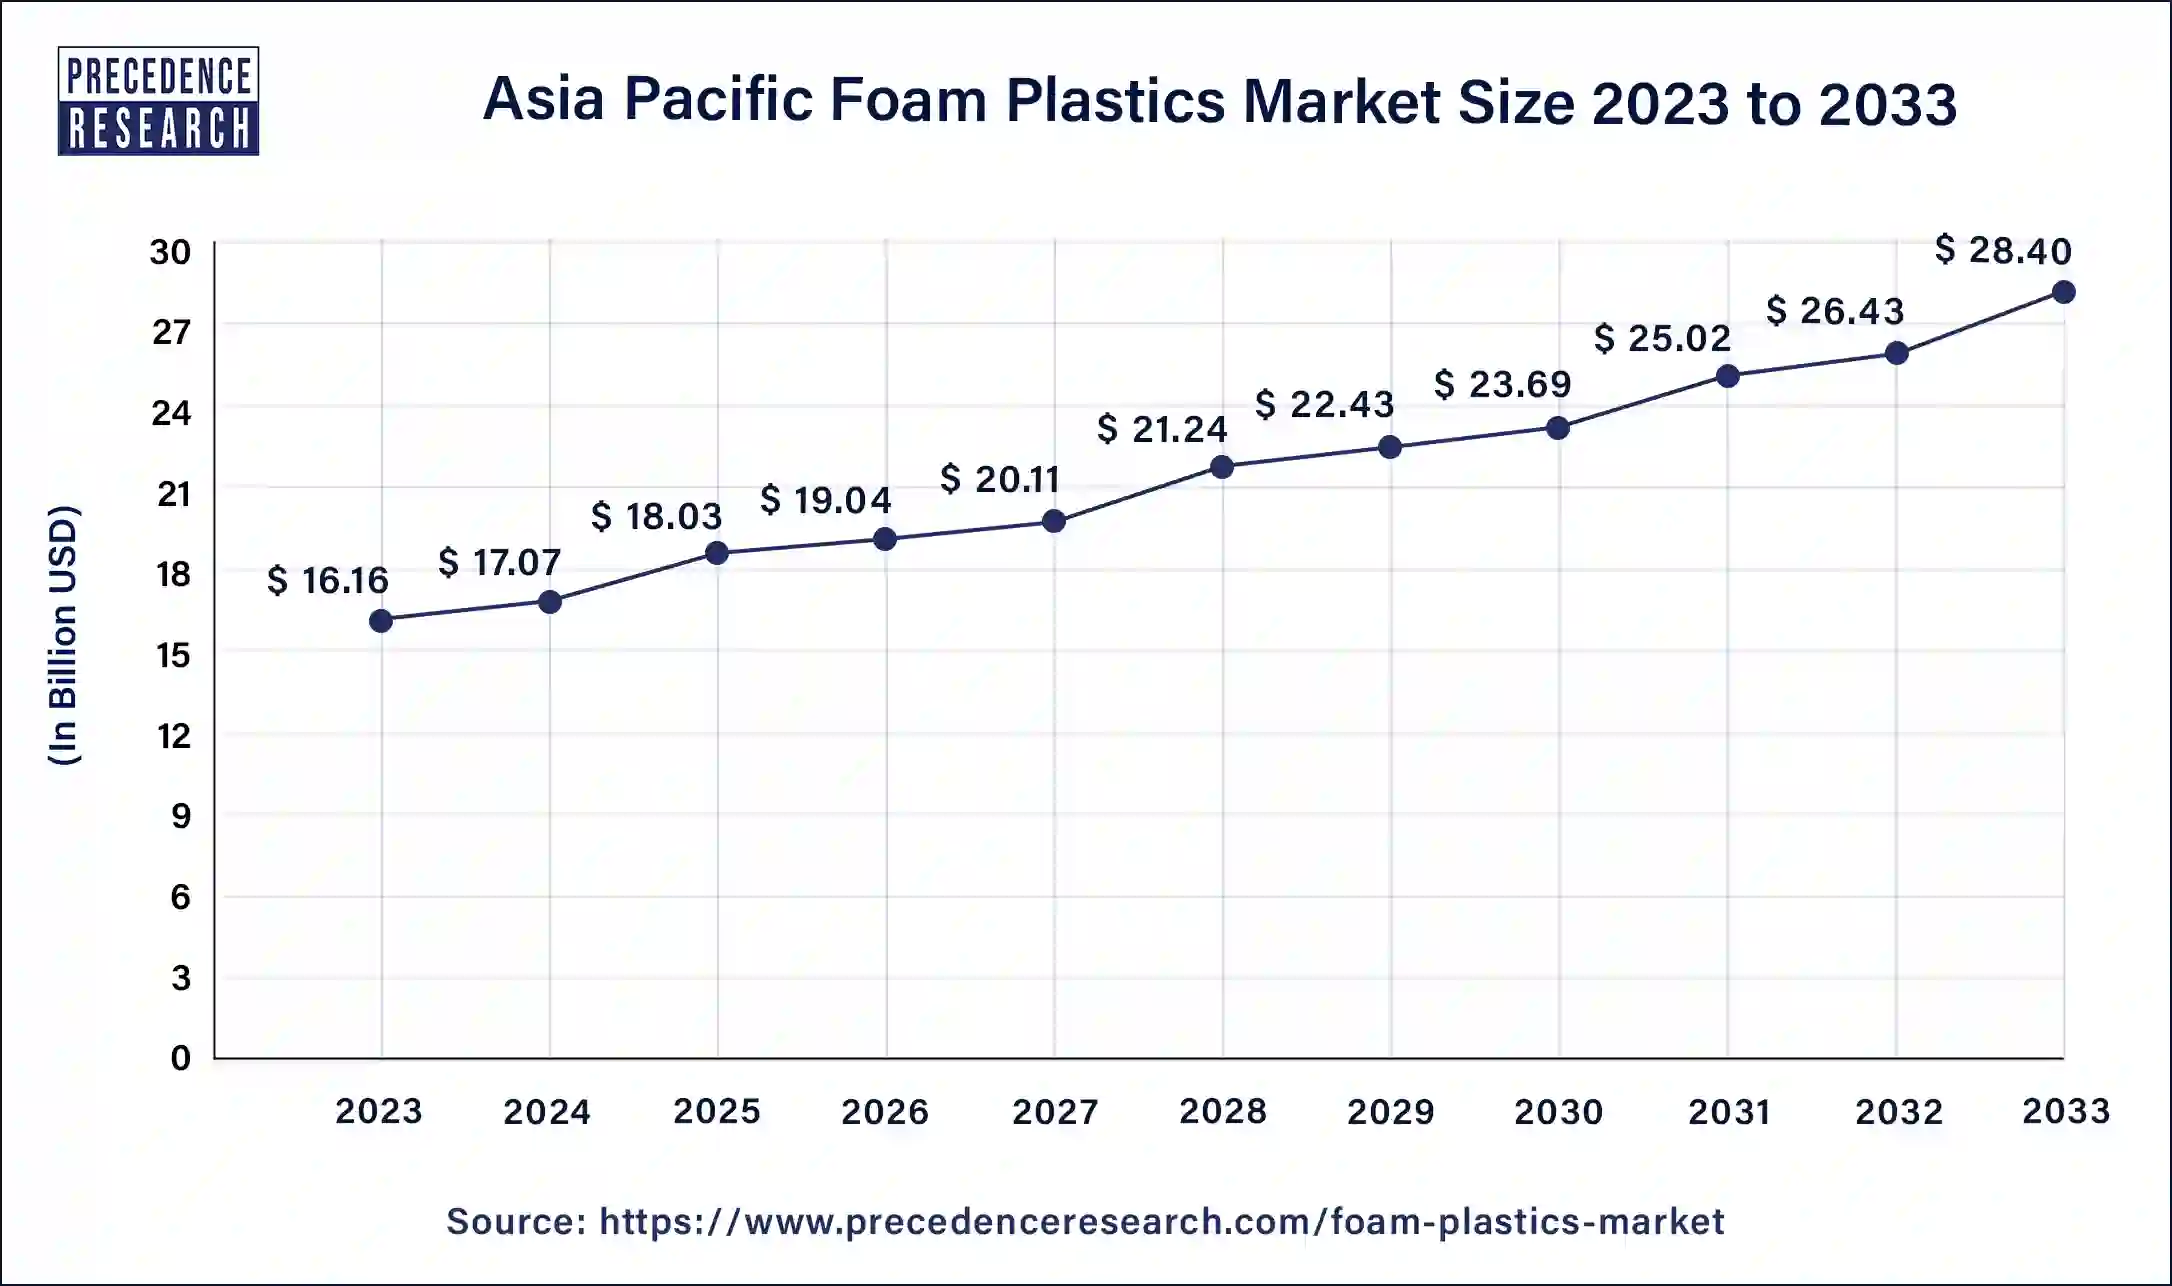 Asia Pacific Foam Plastics Market Size 2024 to 2033